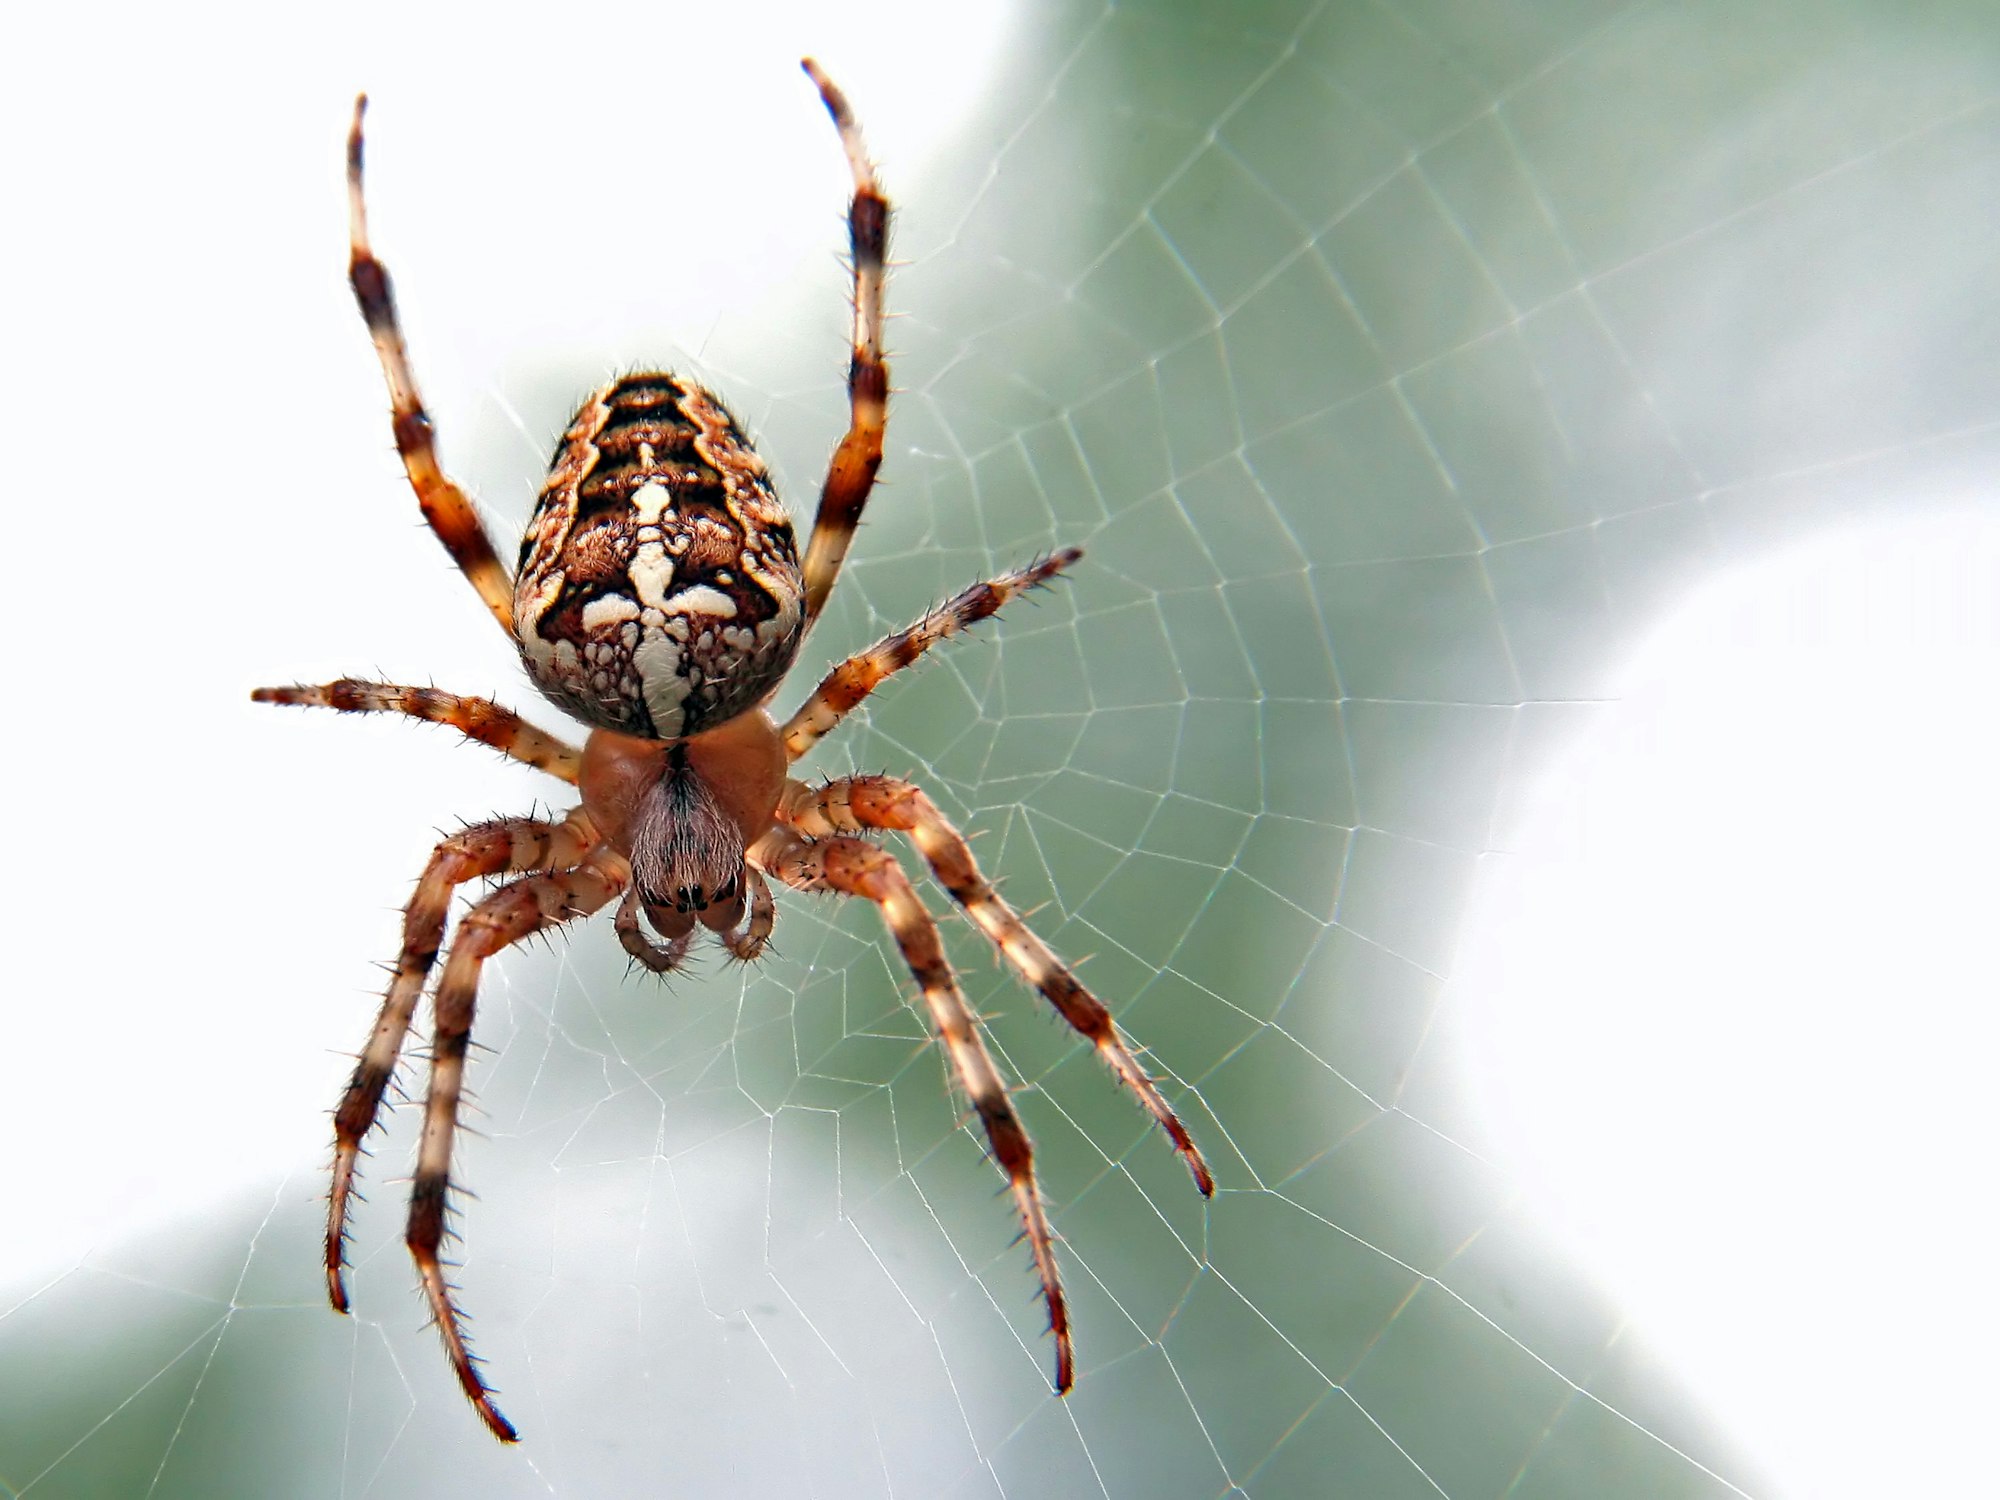 Spider crawling its web